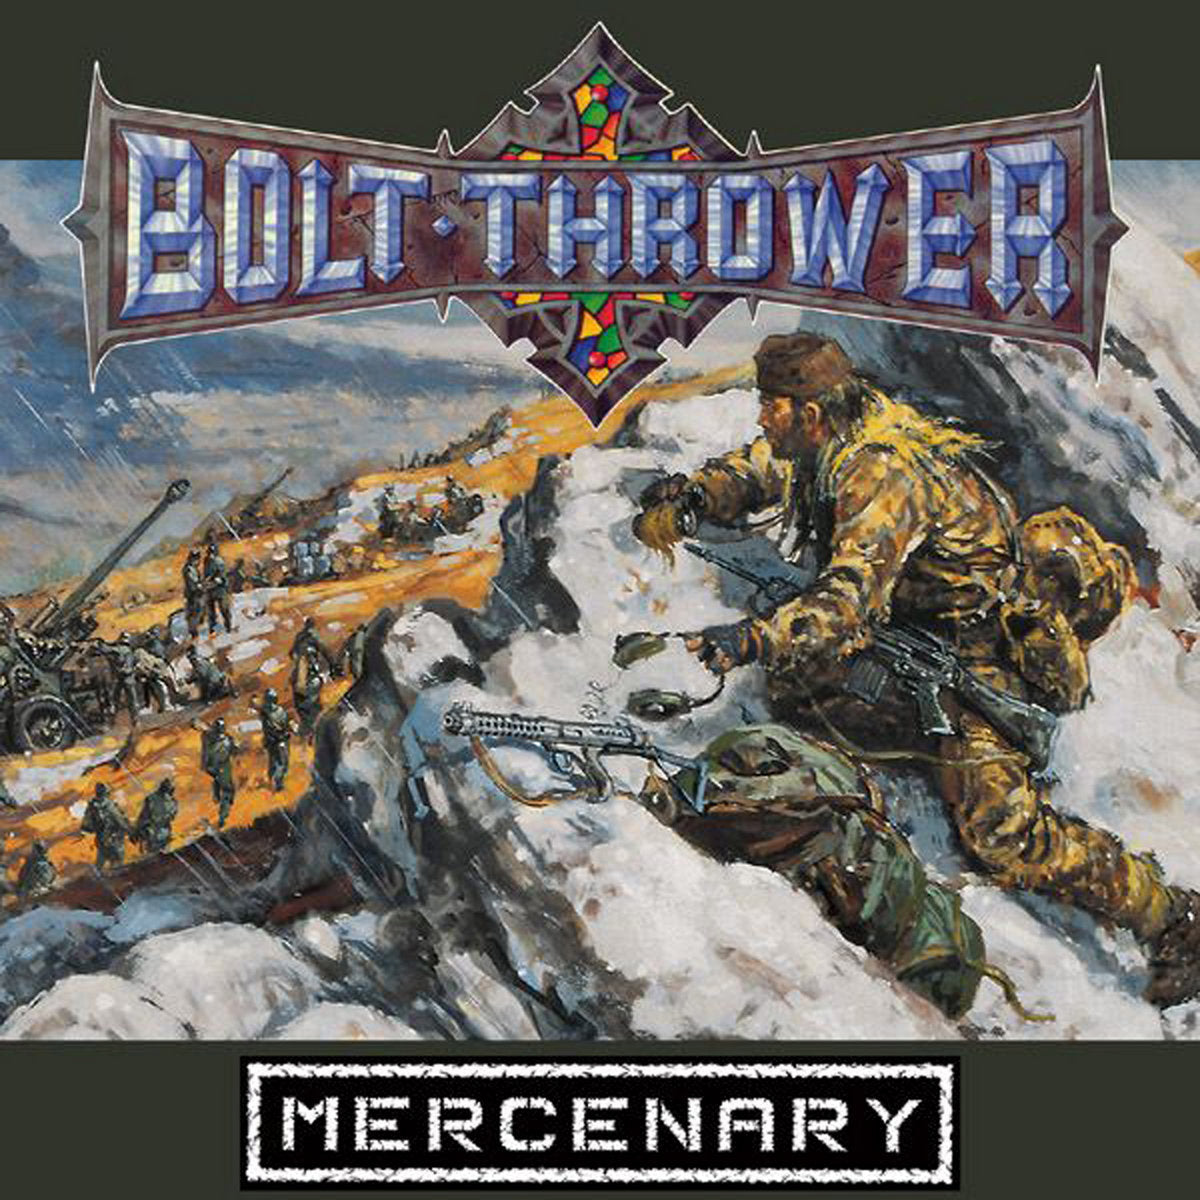 [SOLD OUT] BOLT THROWER "Mercenary" CD